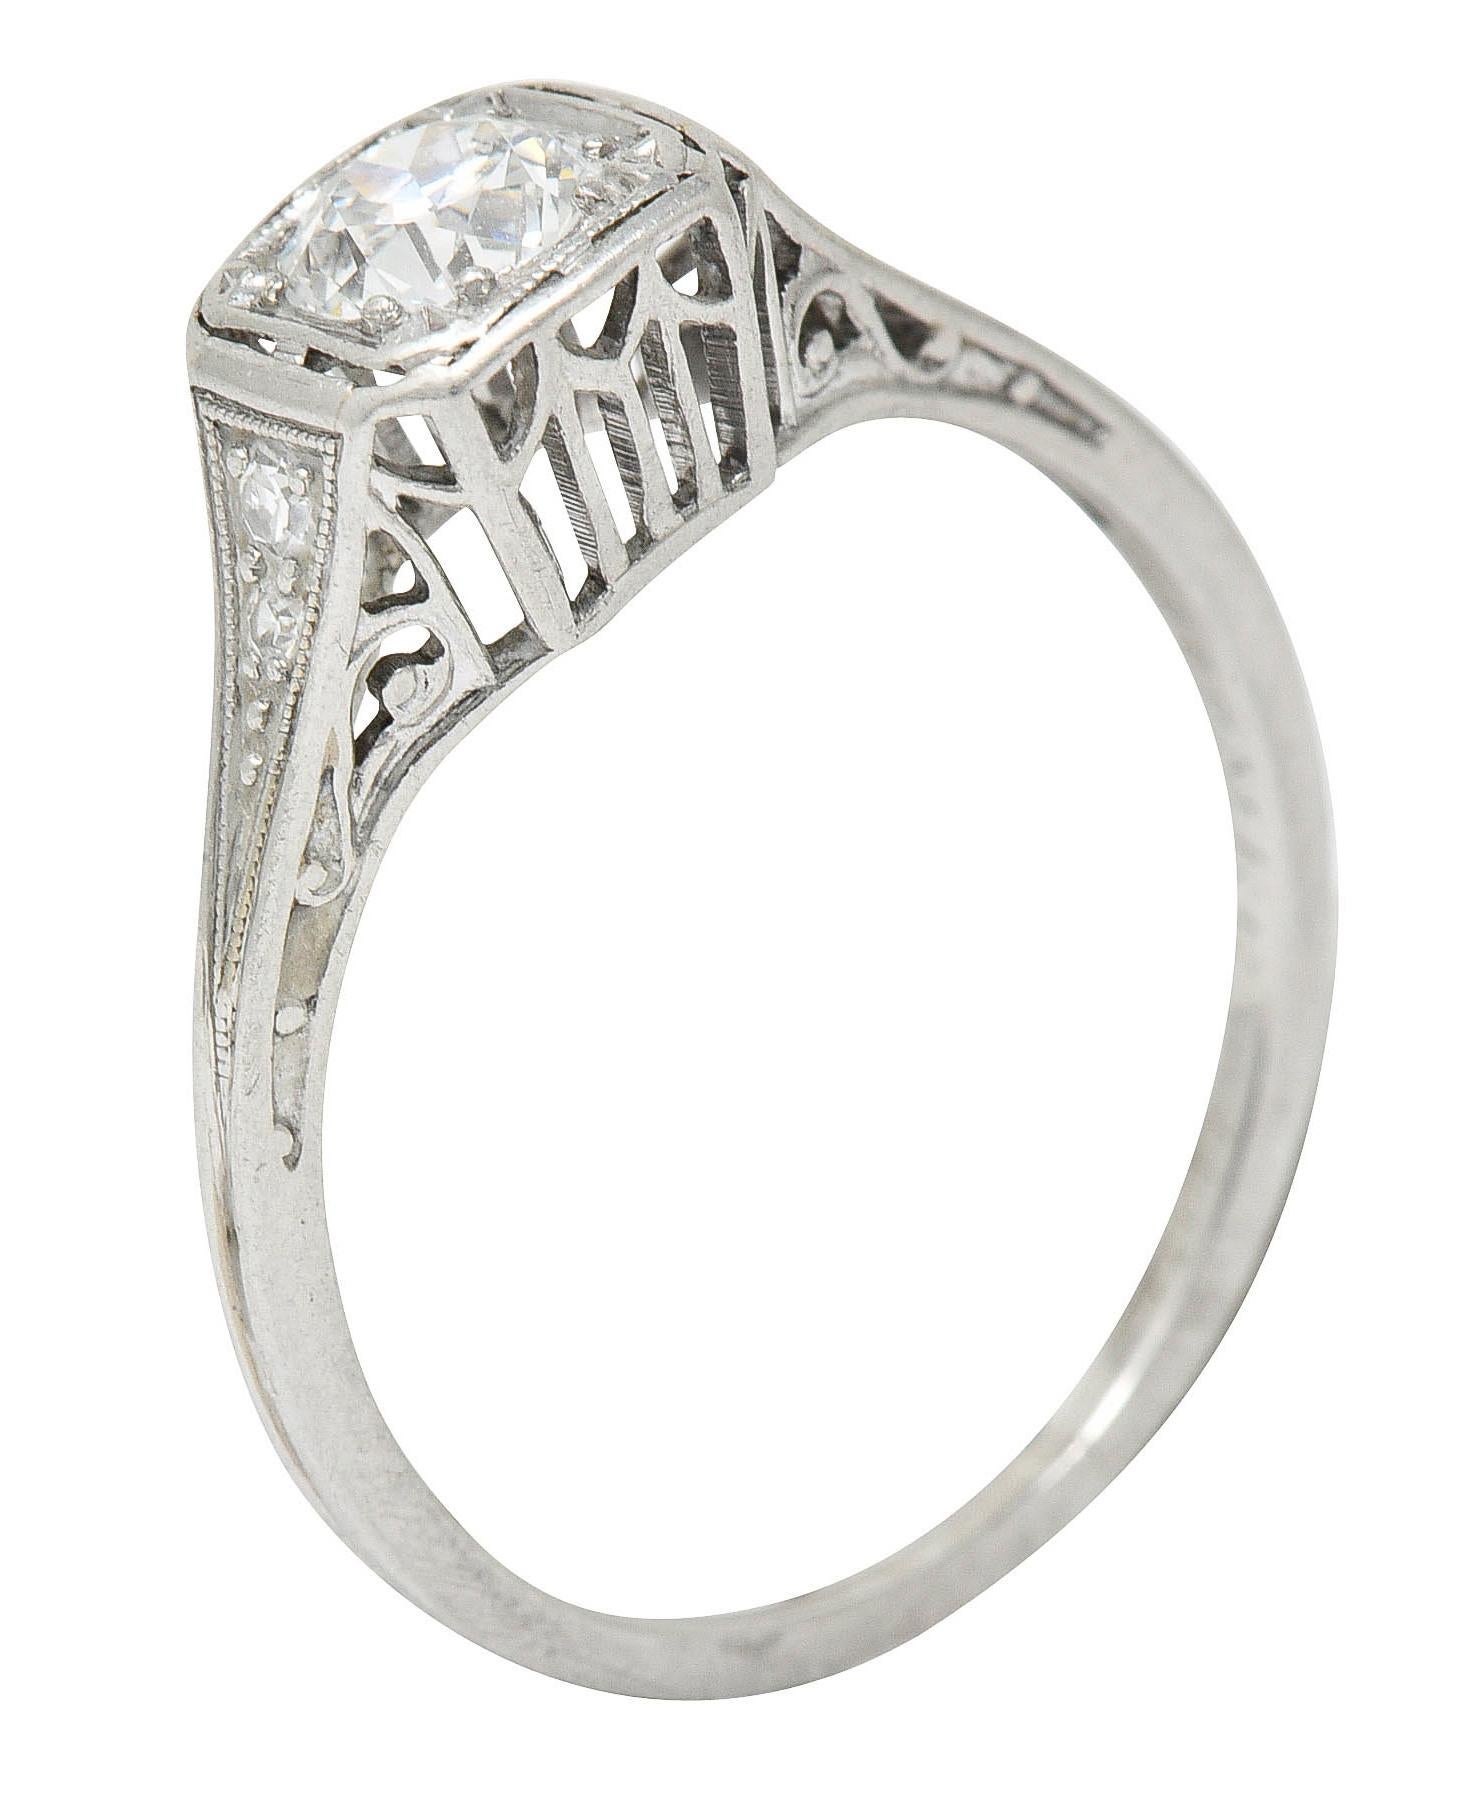 J.E. Caldwell 0.55 Carat Diamond Platinum Engagement Ring, Circa 1920 7